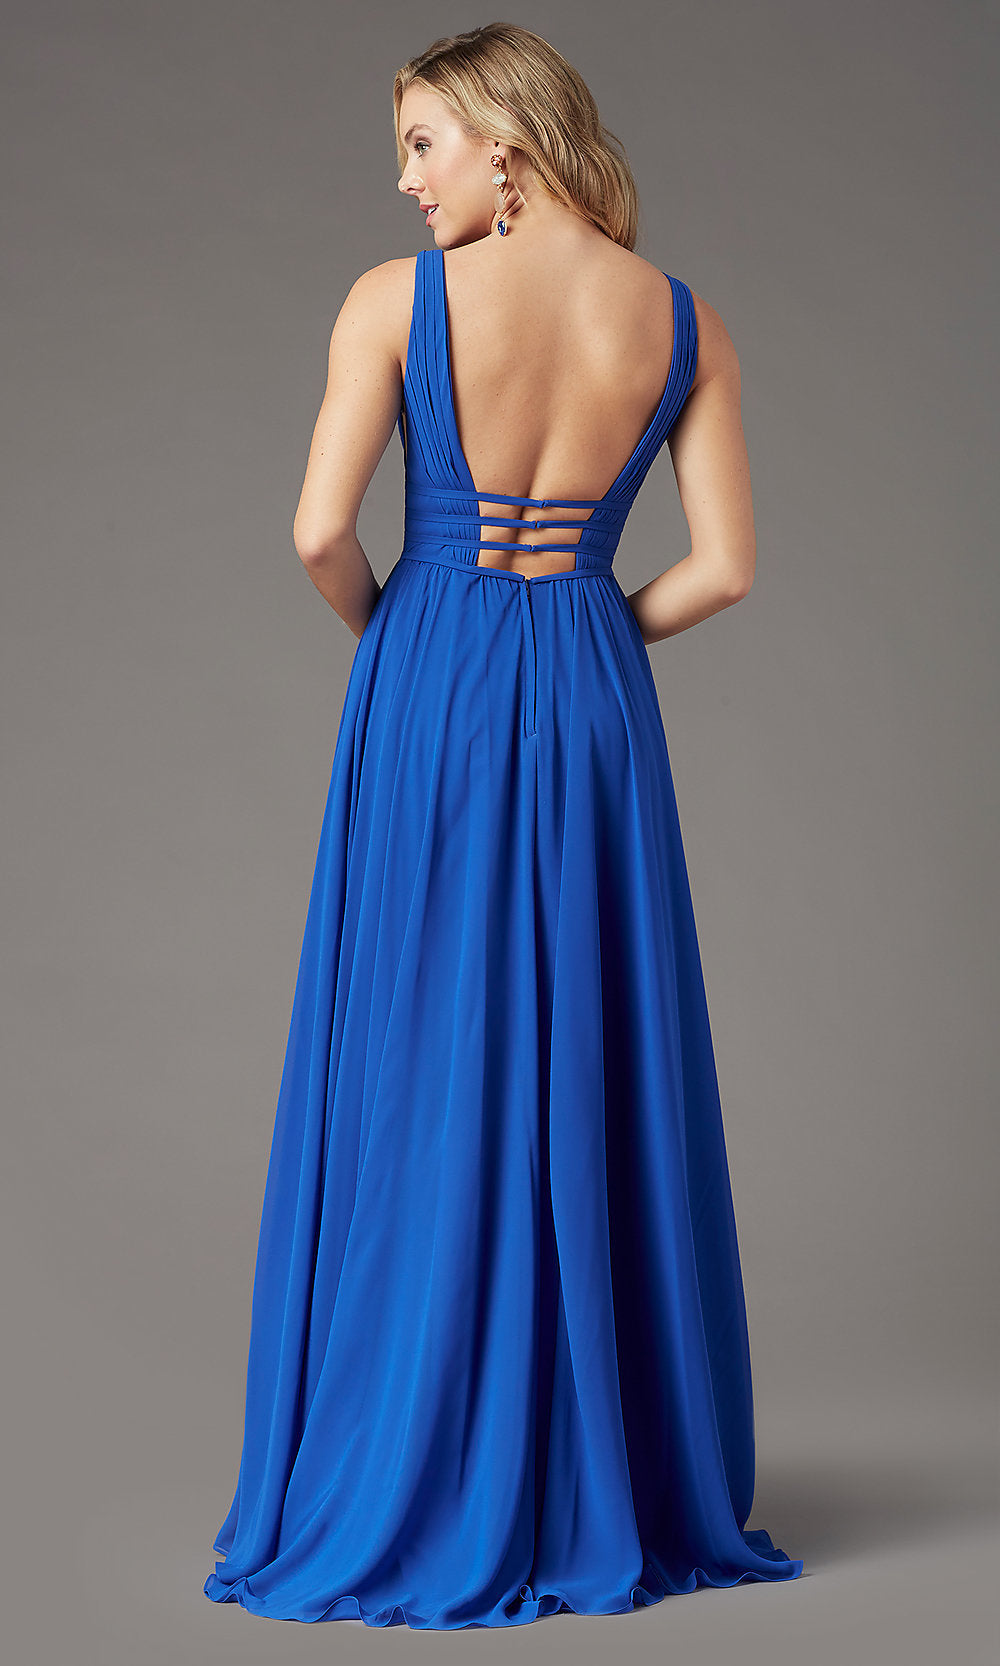 True Blue Grecian-Style Long Formal Prom Dress by PromGirl